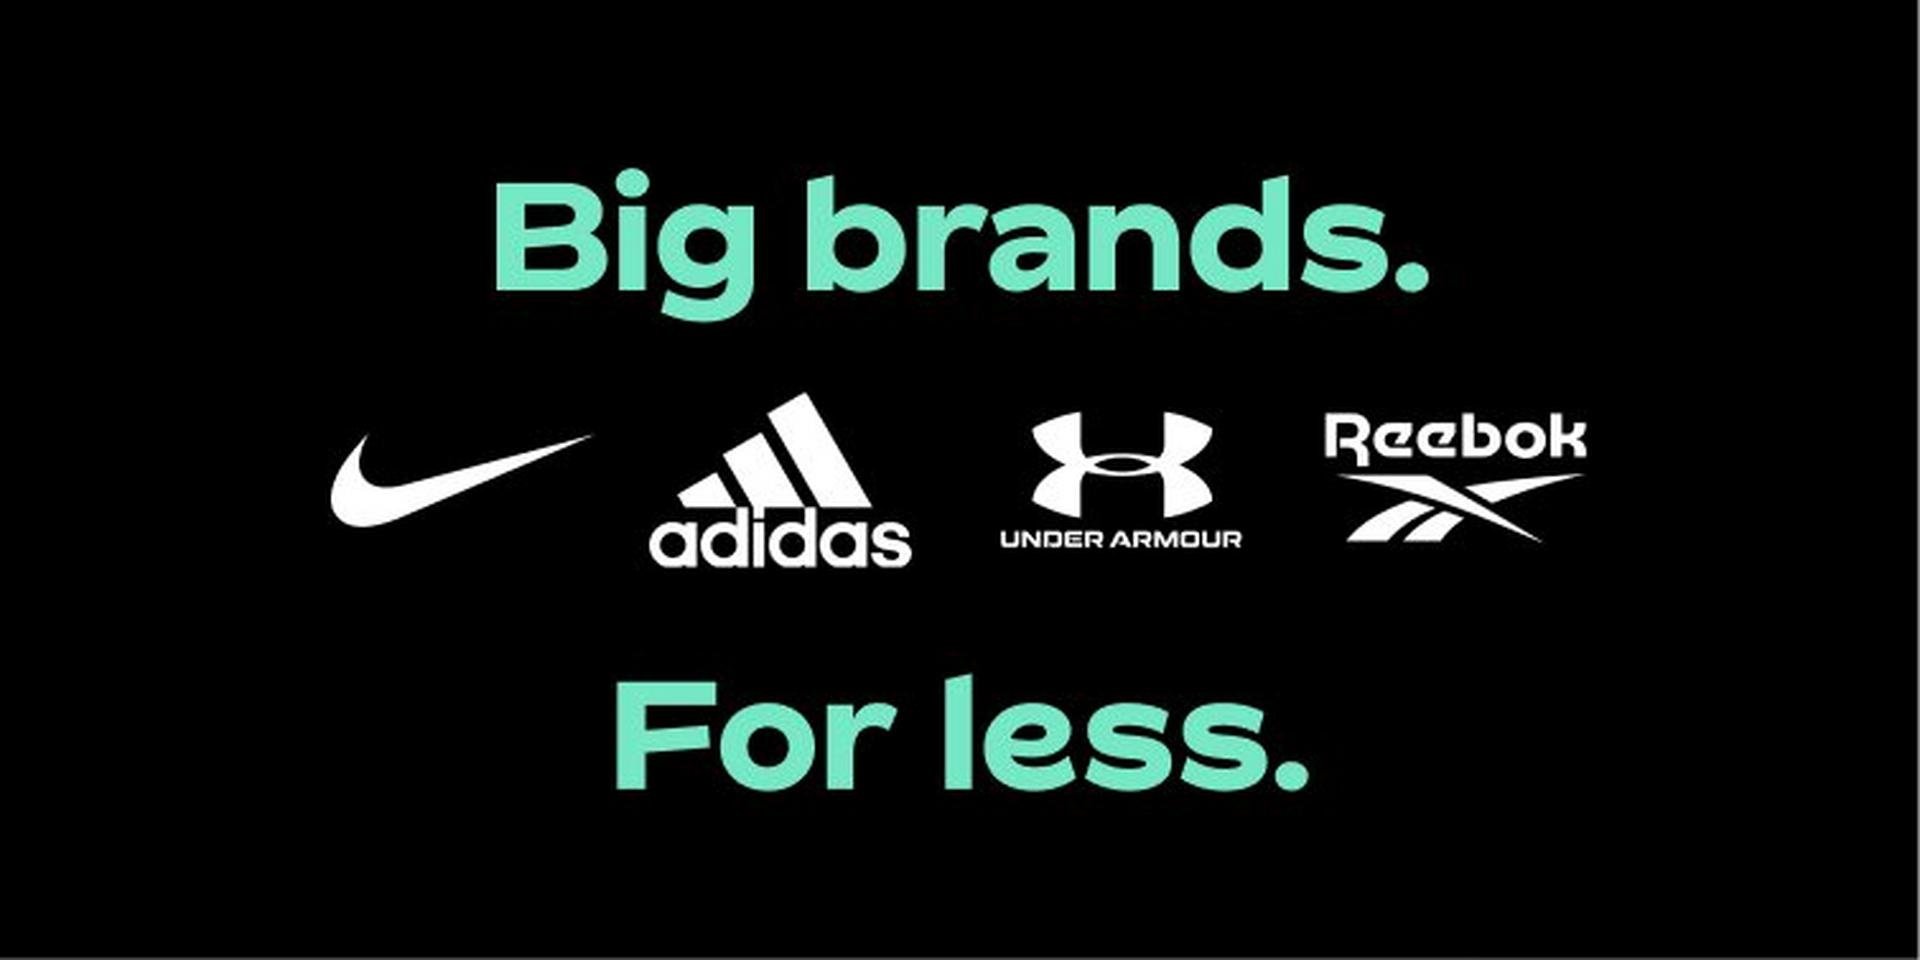 Big Brands For Less - Nike, Adidas, Under Armour, Reebok logos